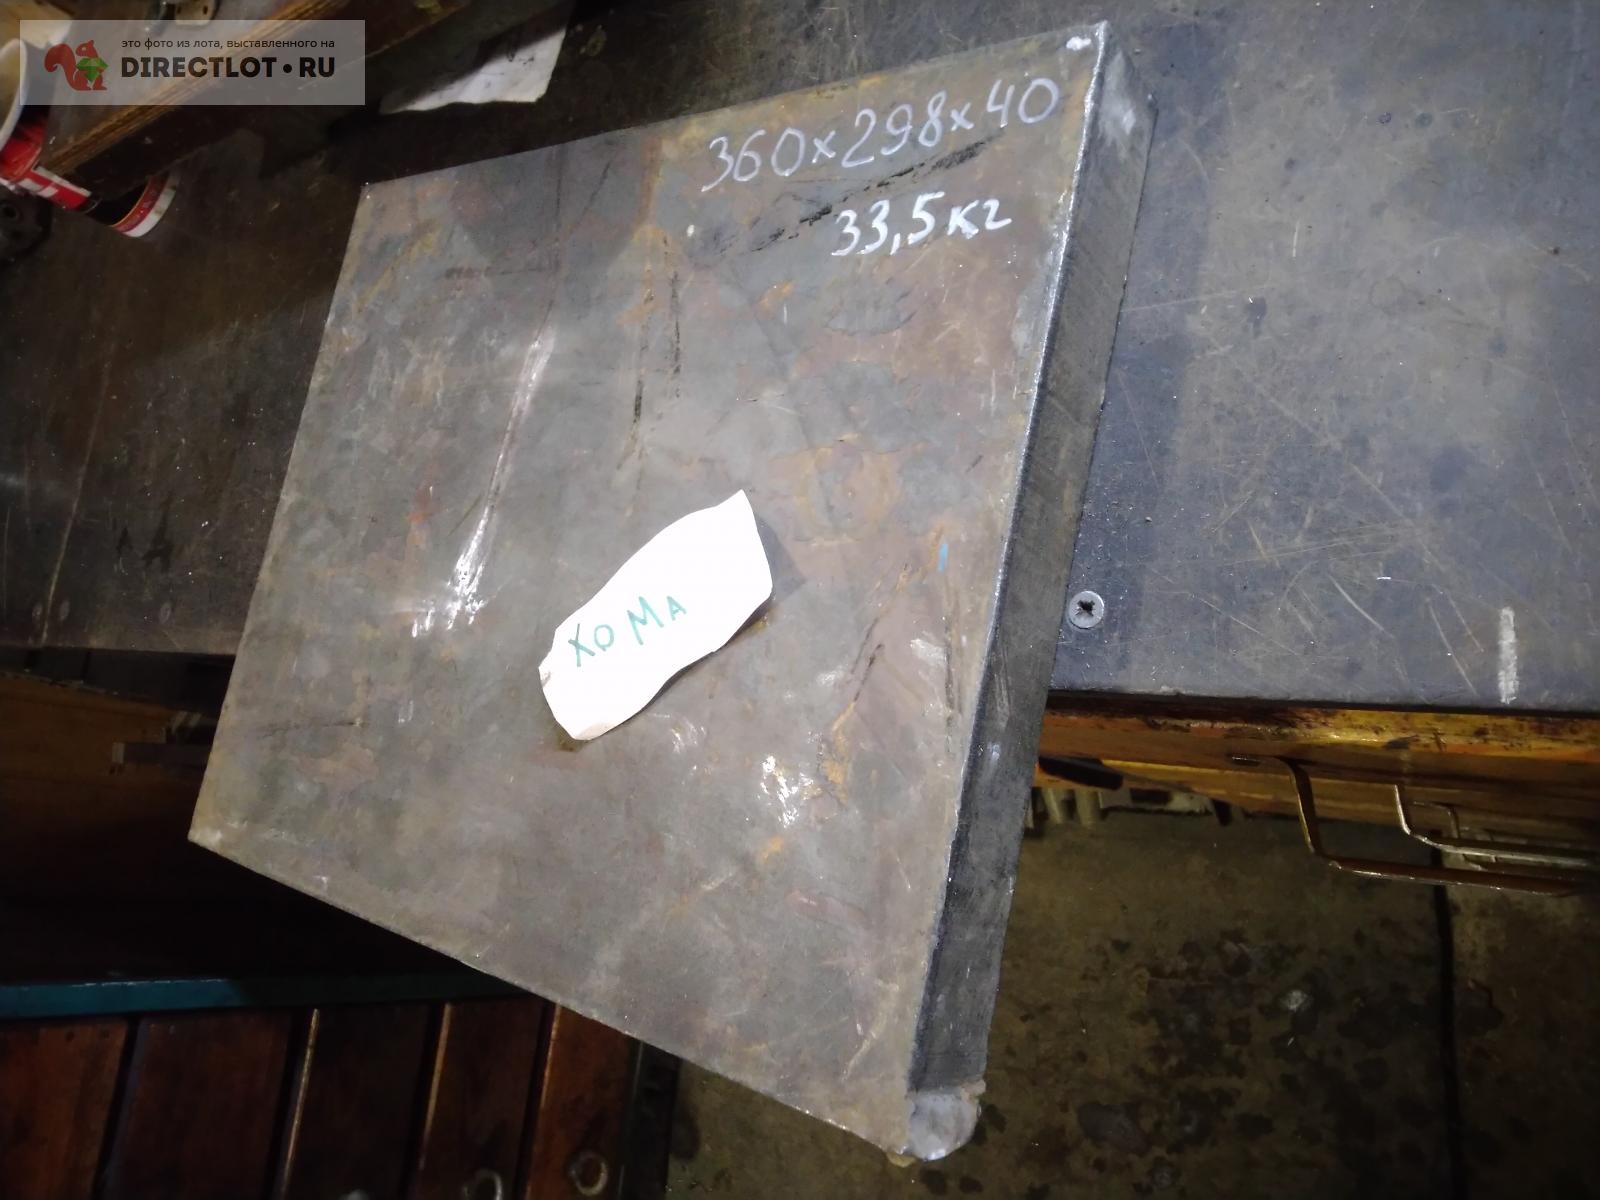 Плита стальная 360х298х40  в Череповеце цена 2000 Р на DIRECTLOT .